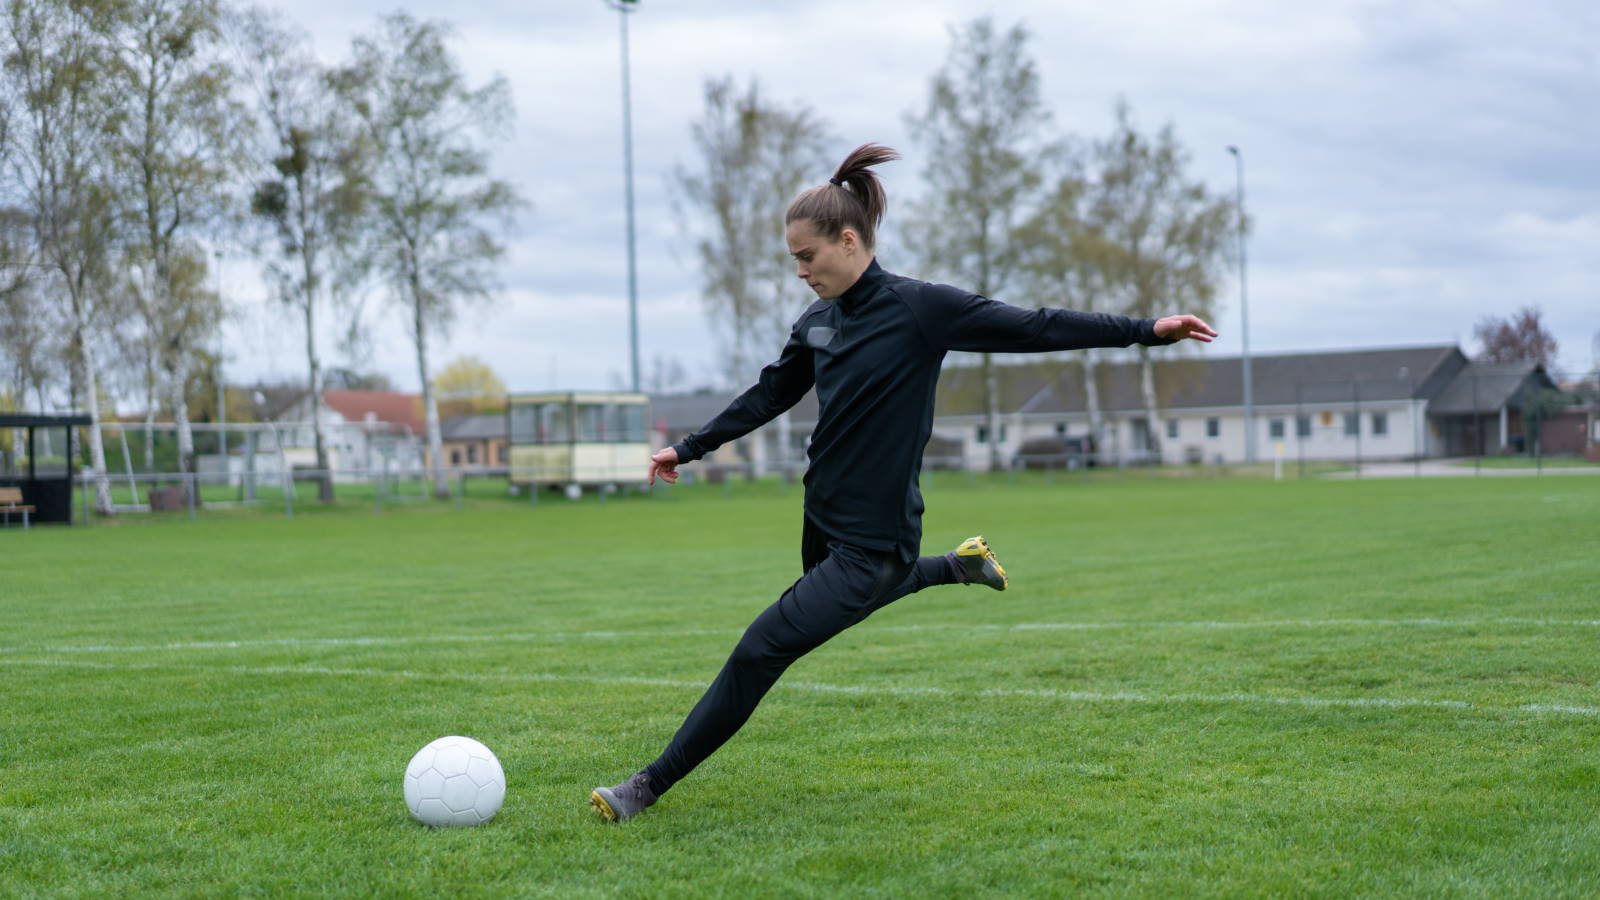 Ewa Pajor kicking ball